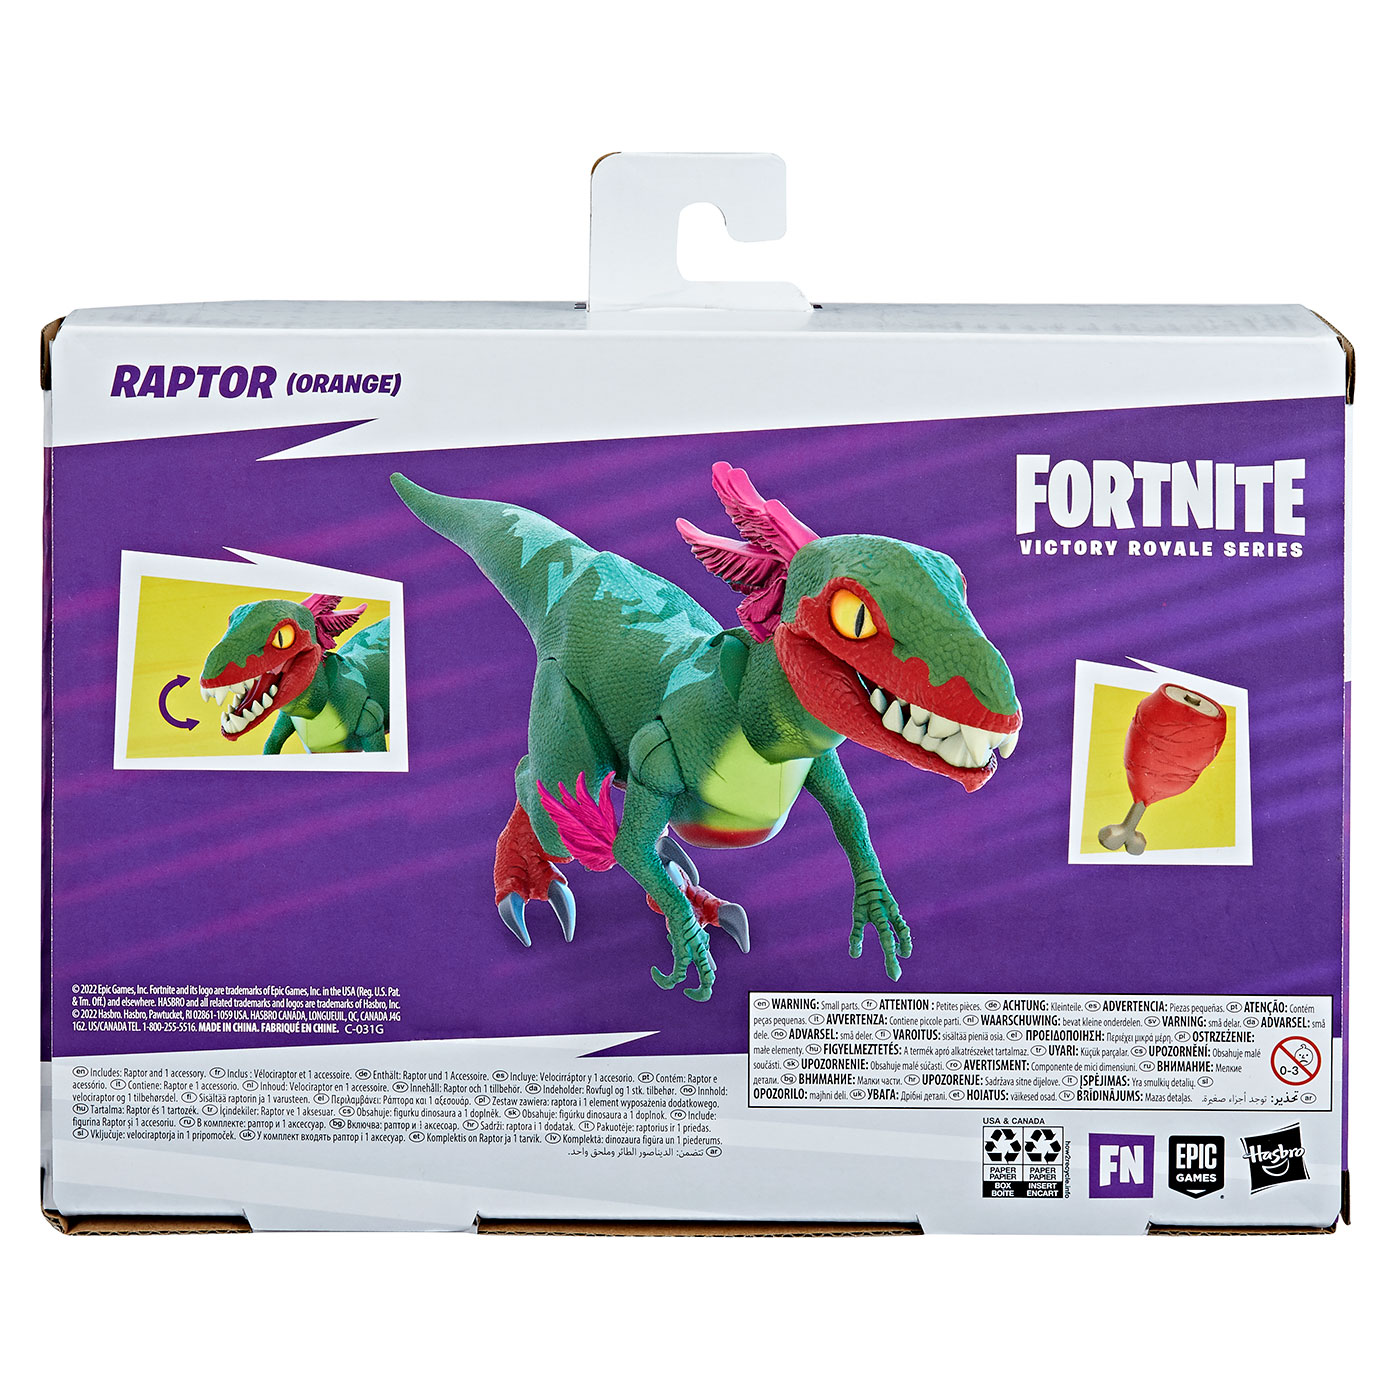 Fortnite Victory Royale Creature Raptor Orange画像